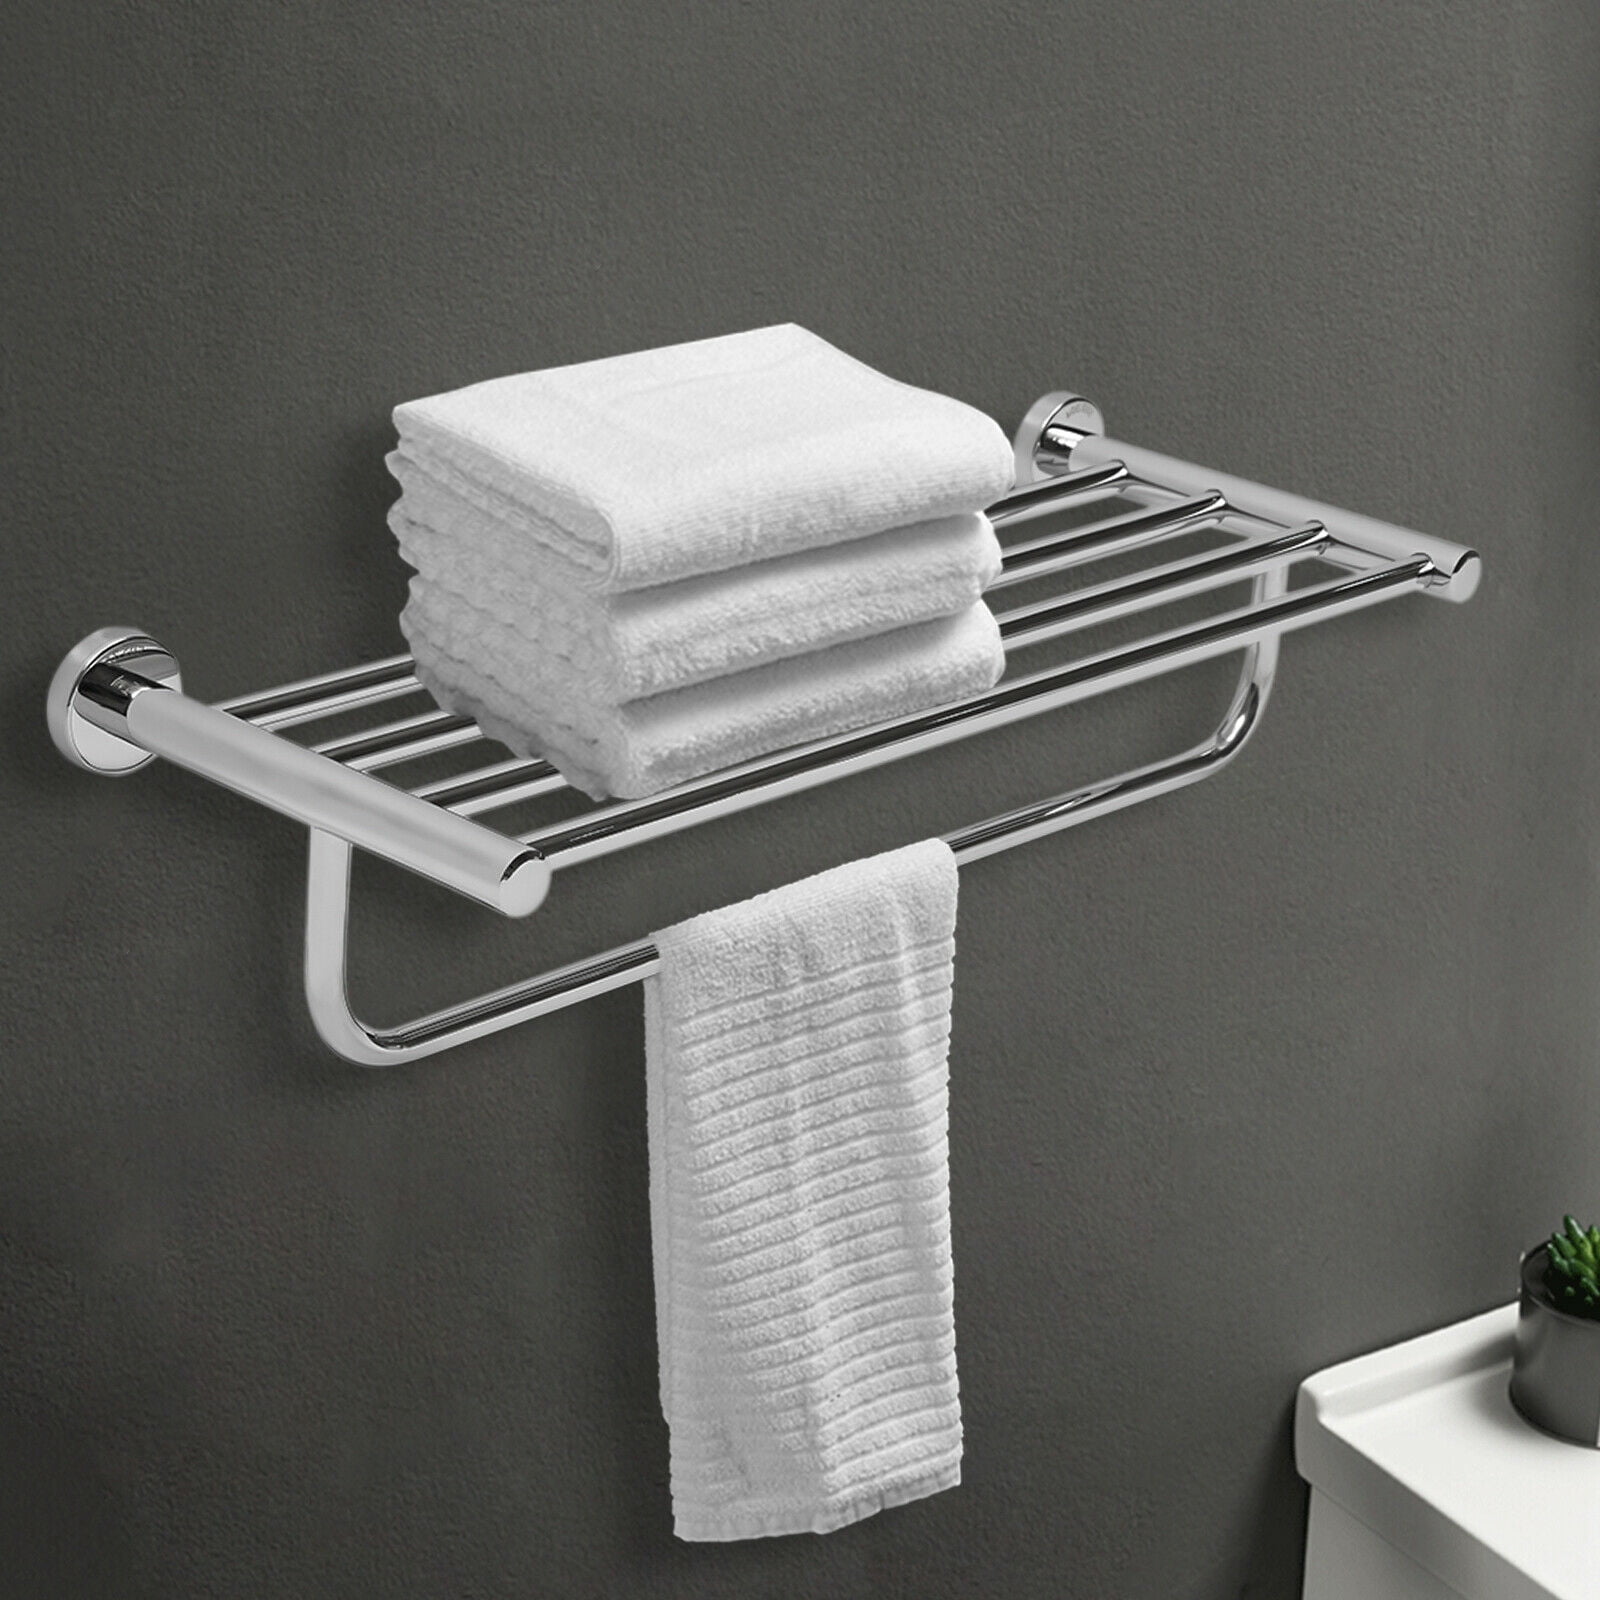 Wall Mounted Towel Rack Bathroom Hotel Rail Holder Storage Shelf Stainless Steel 